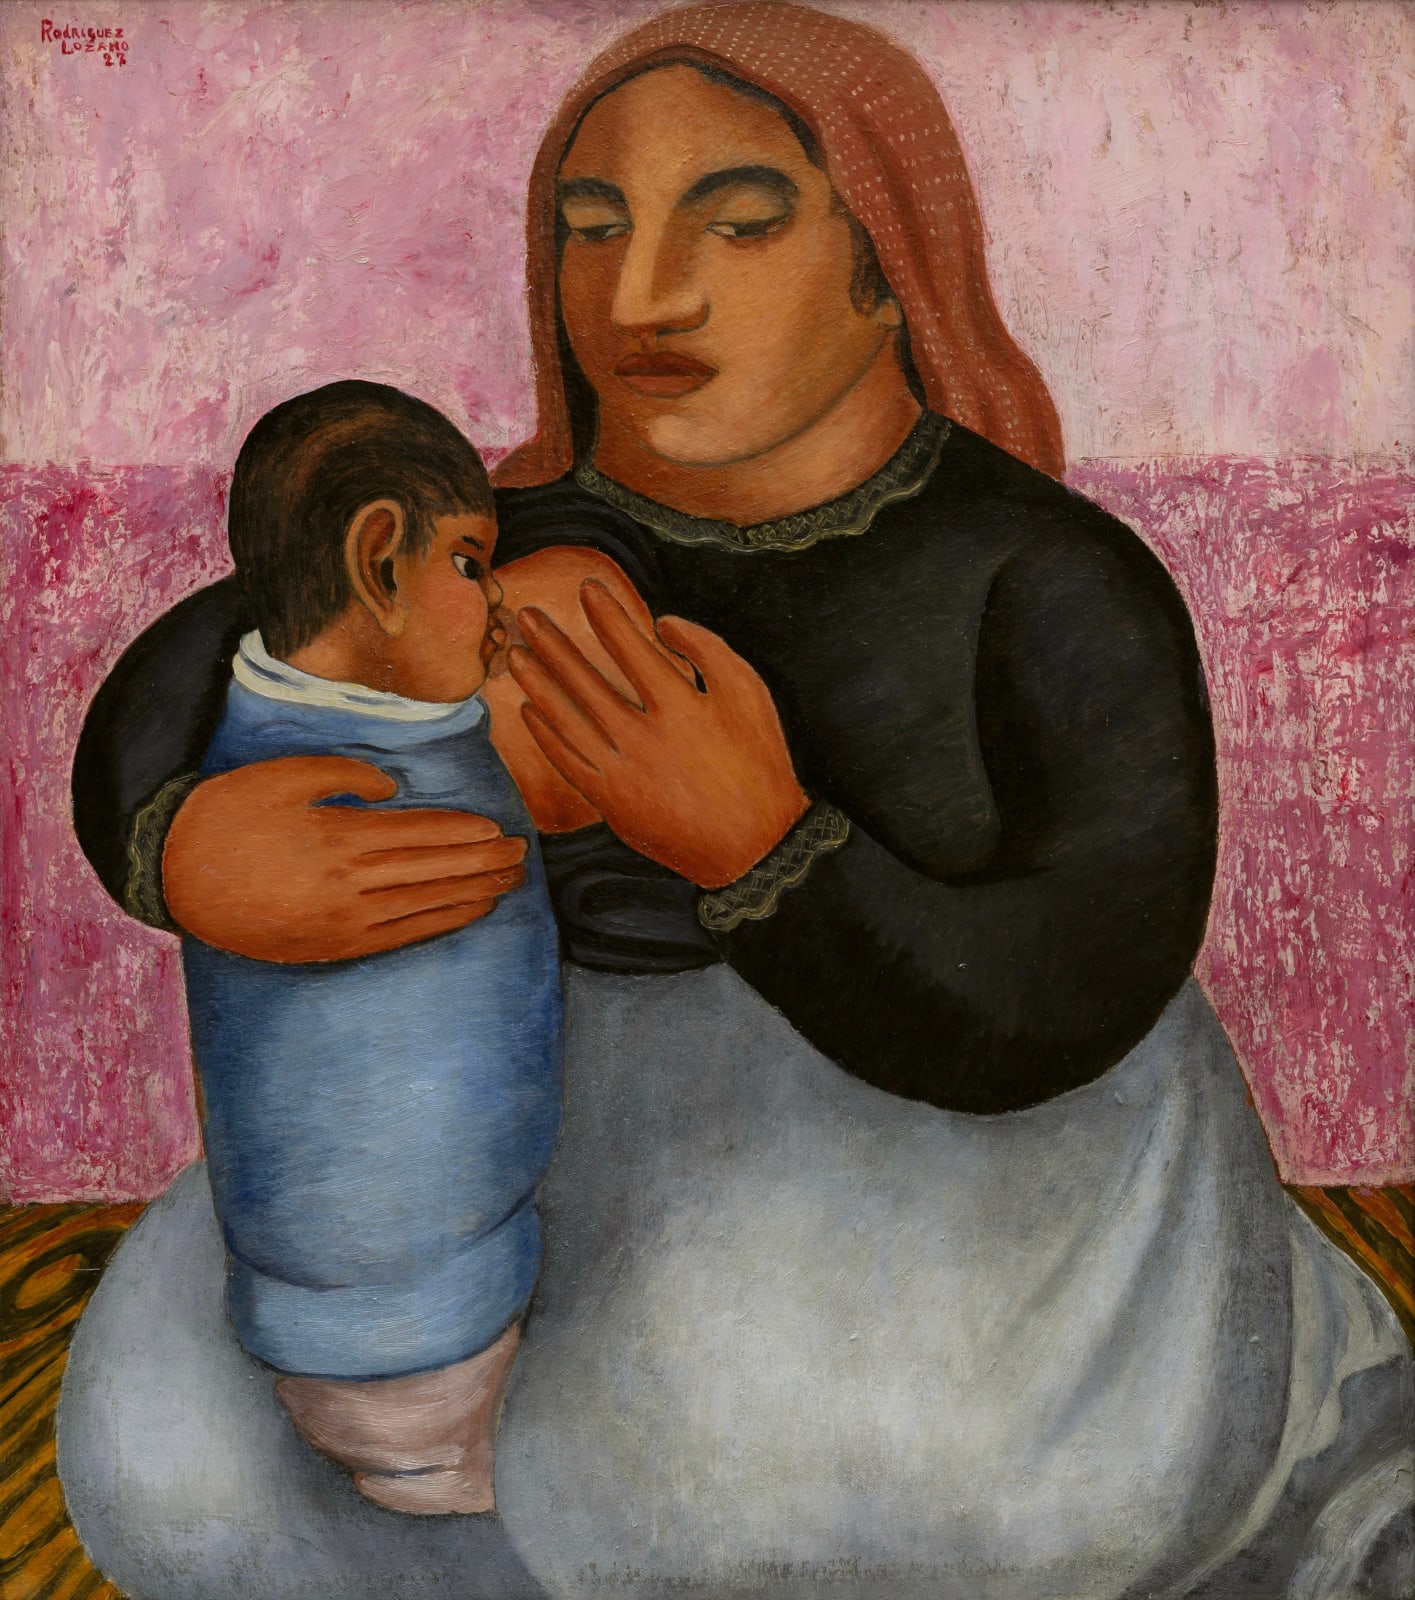 Manuel Rodríguez Lozano, Maternidad (Motherhood), 1927